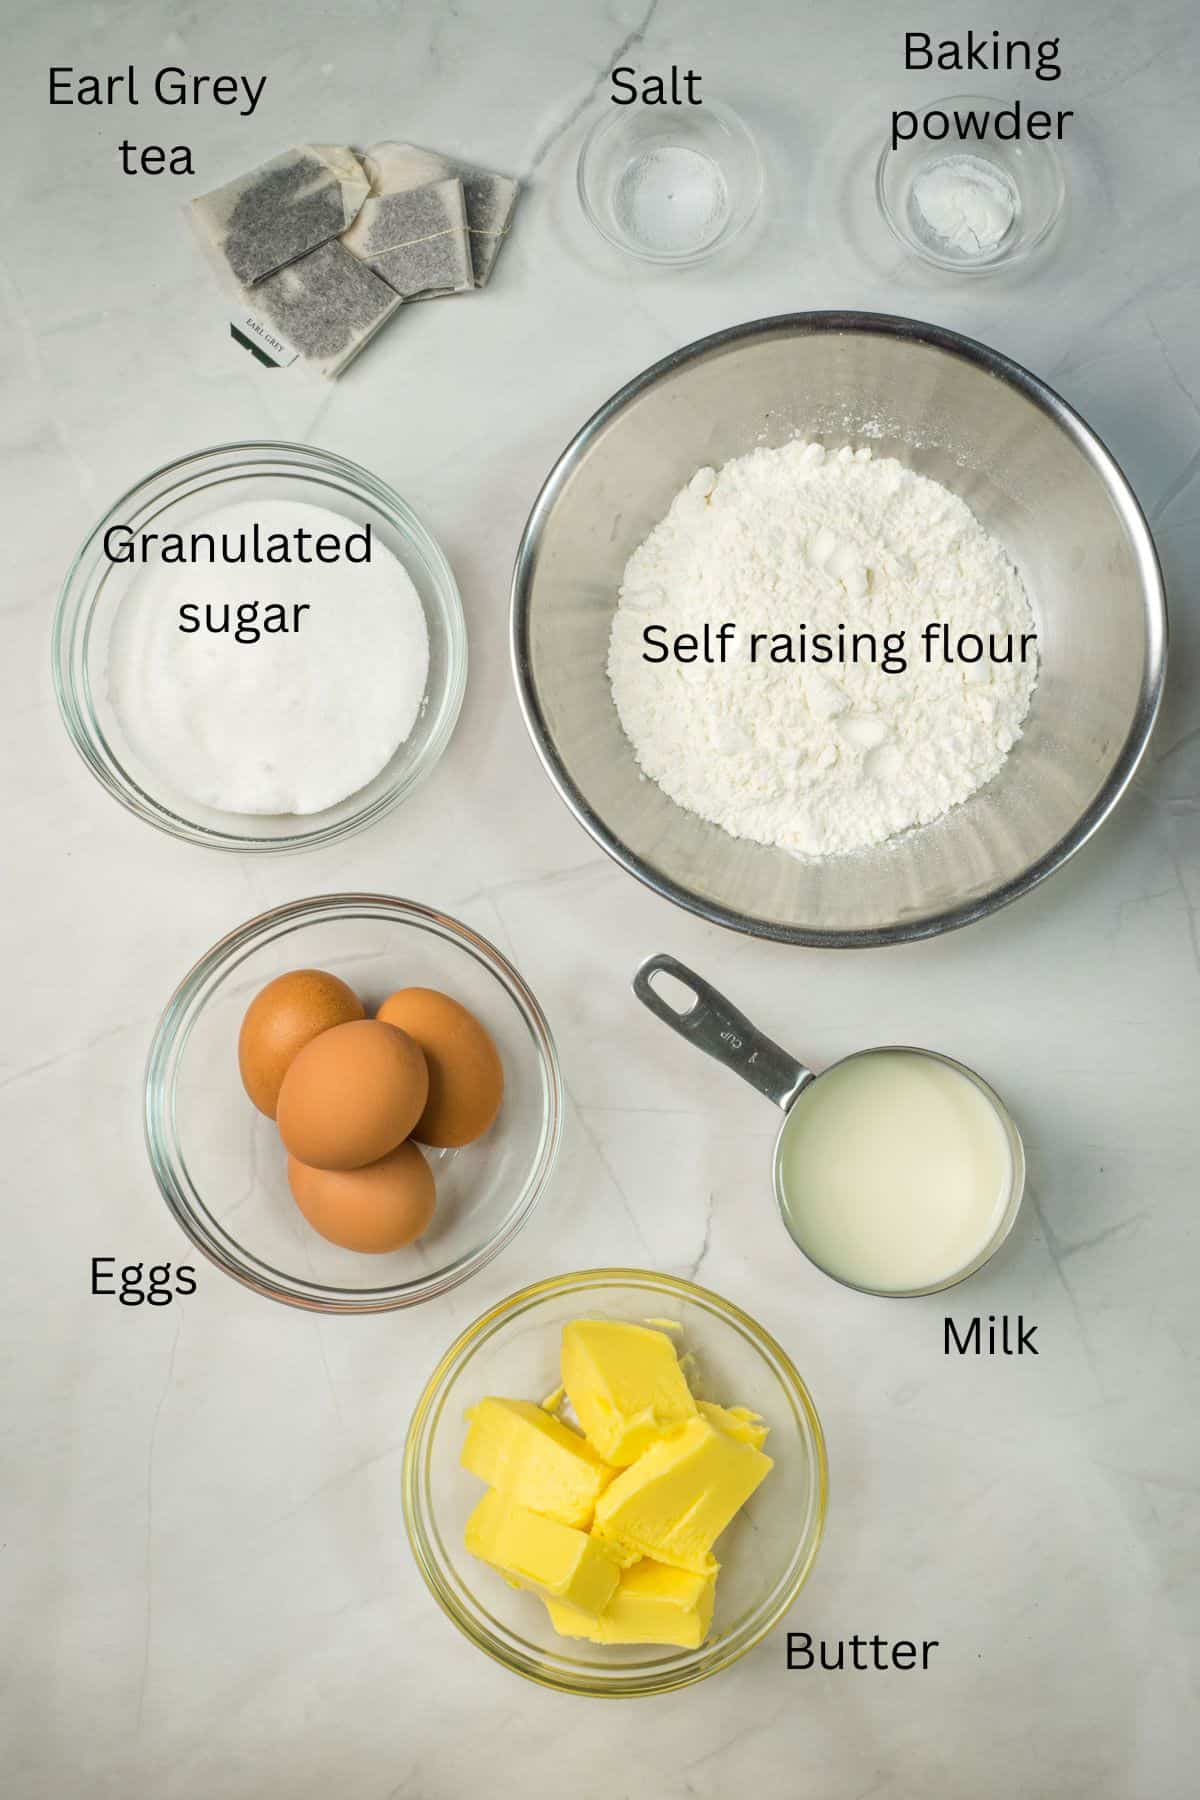 Self raising flour, butter, granulated sugar, eggs, milk, baking powder, salt and earl grey tea in bowls against a marble background.